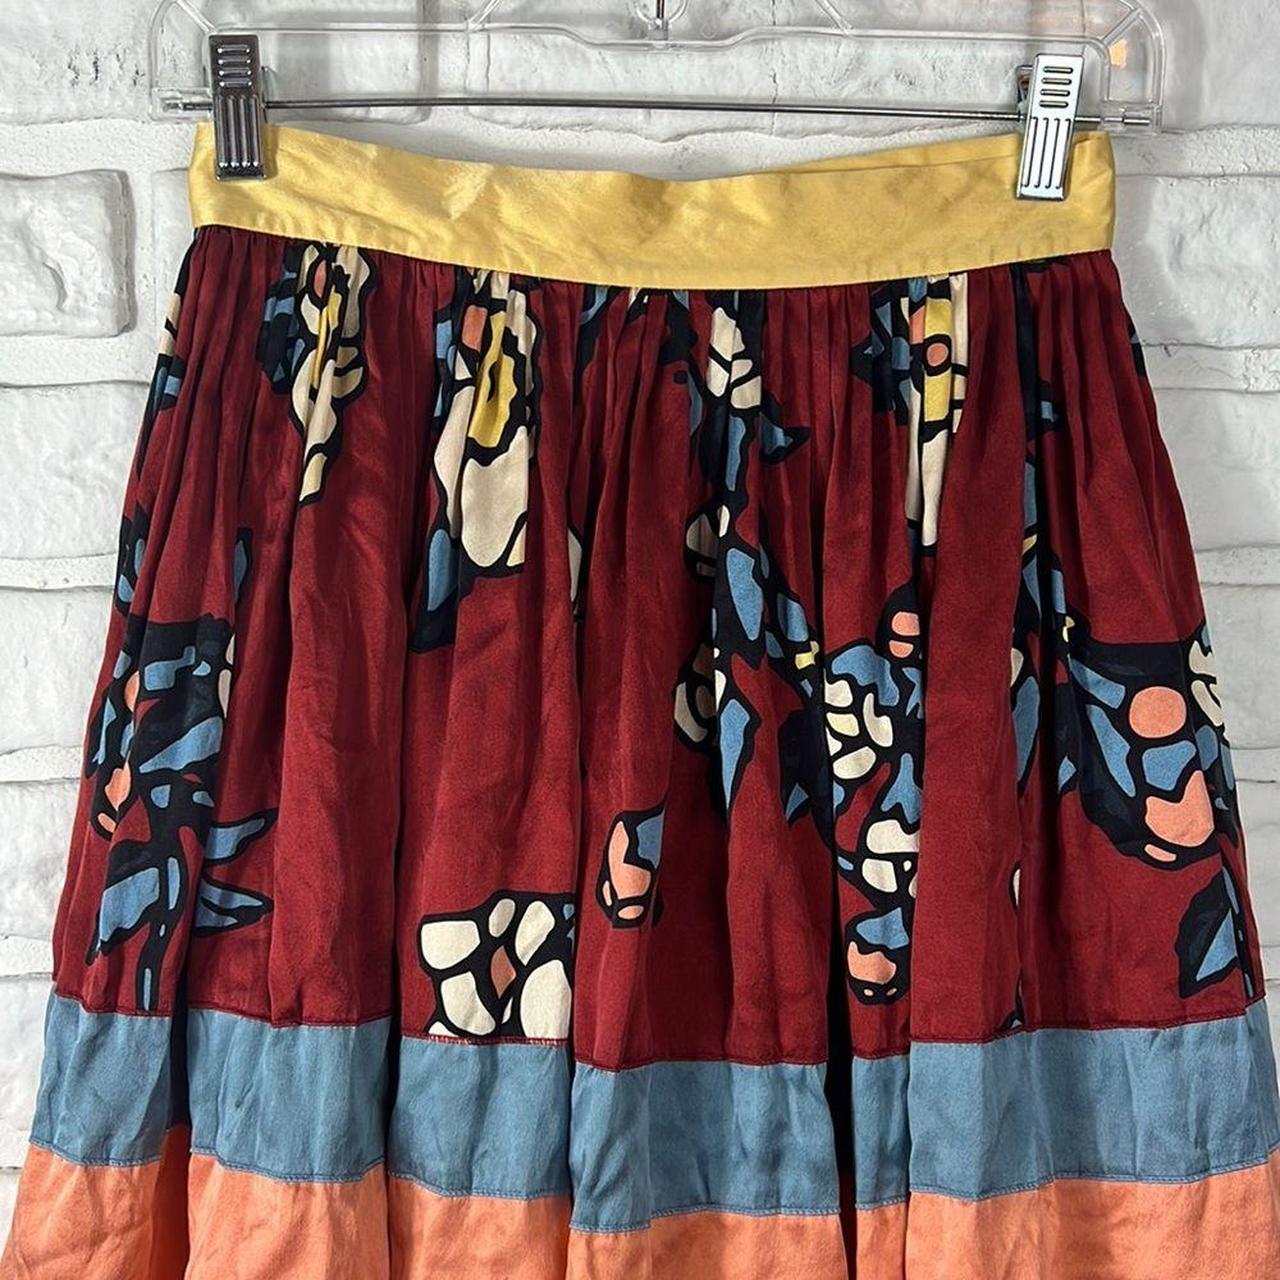 Product Image 2 - 100% Silk floral print skirt
Zipper